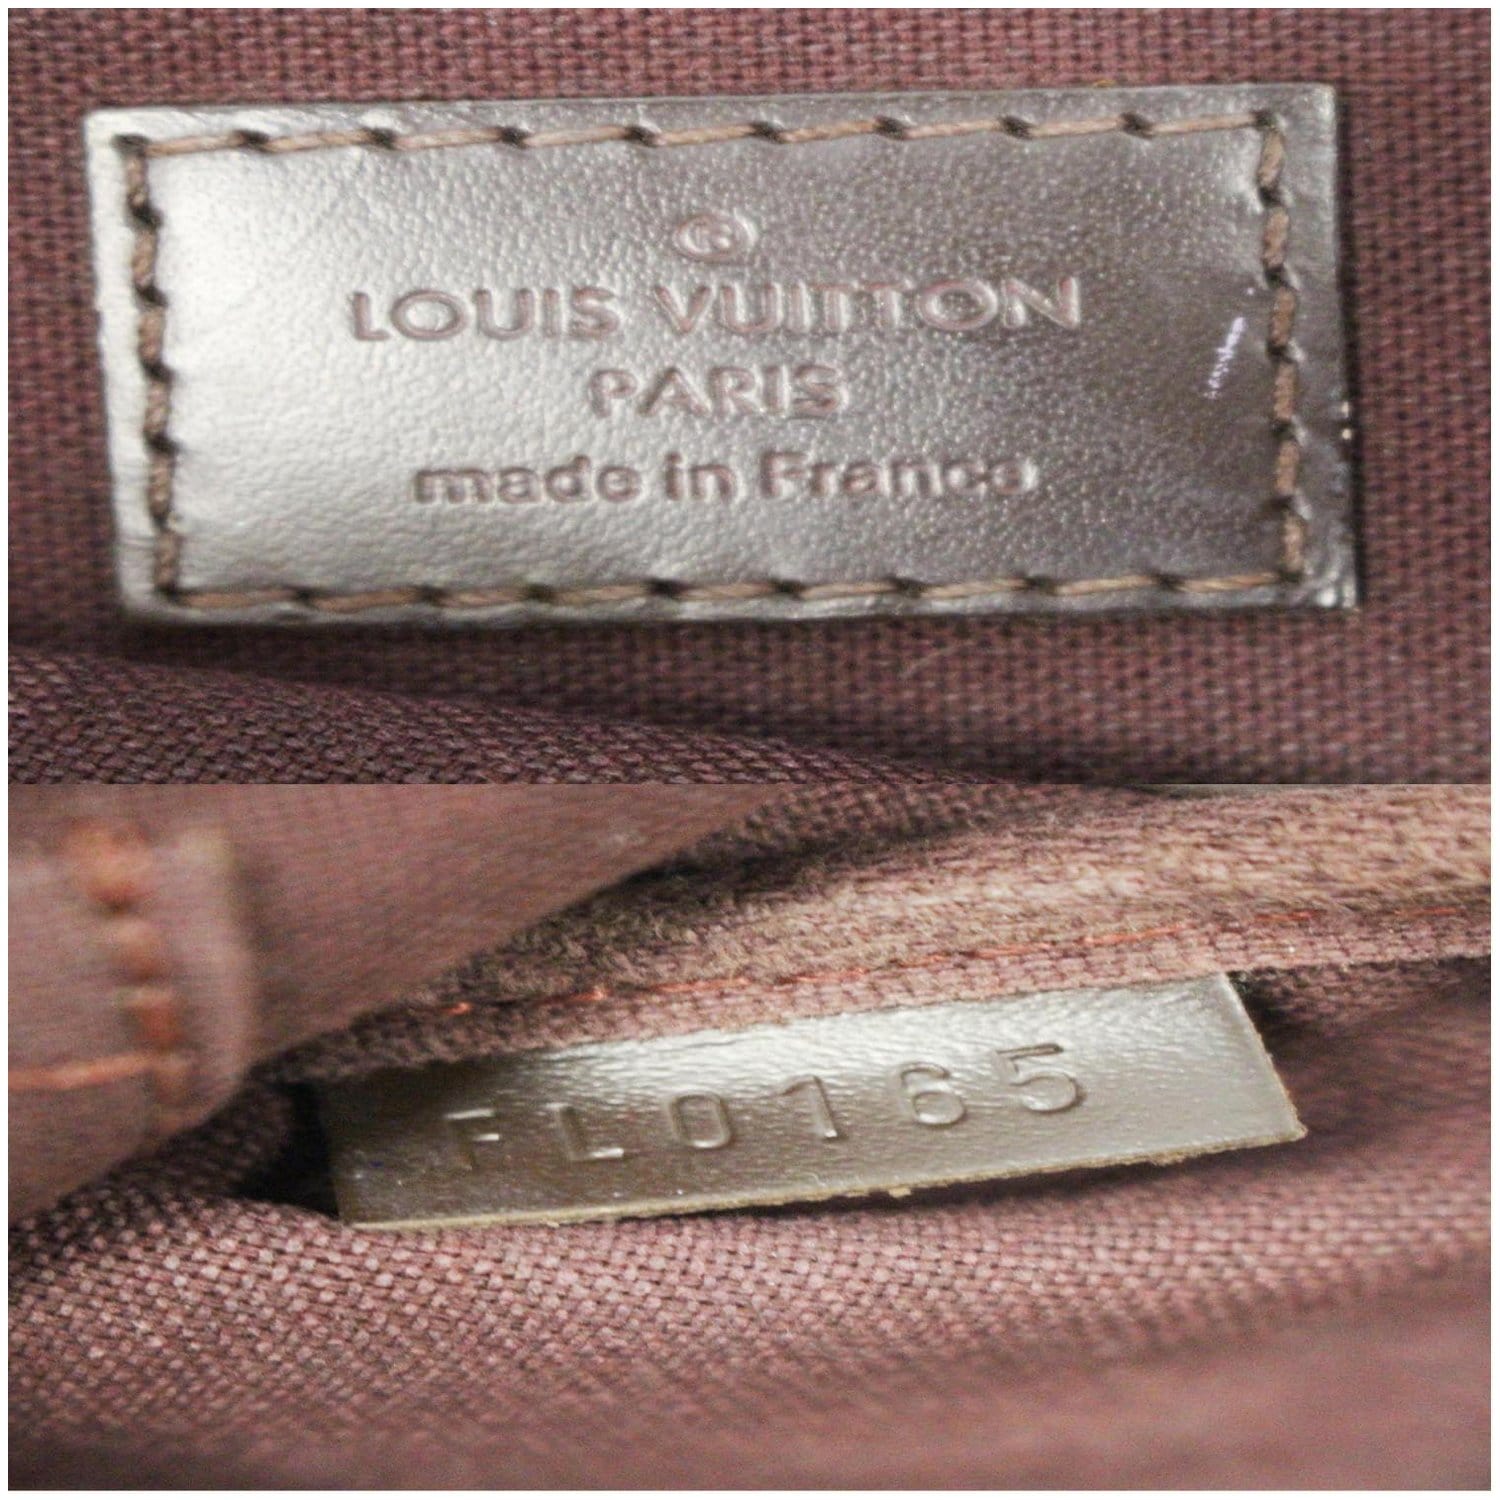 Louis Vuitton Favorite Pm in Damier Ebene #lv #louisvuitton